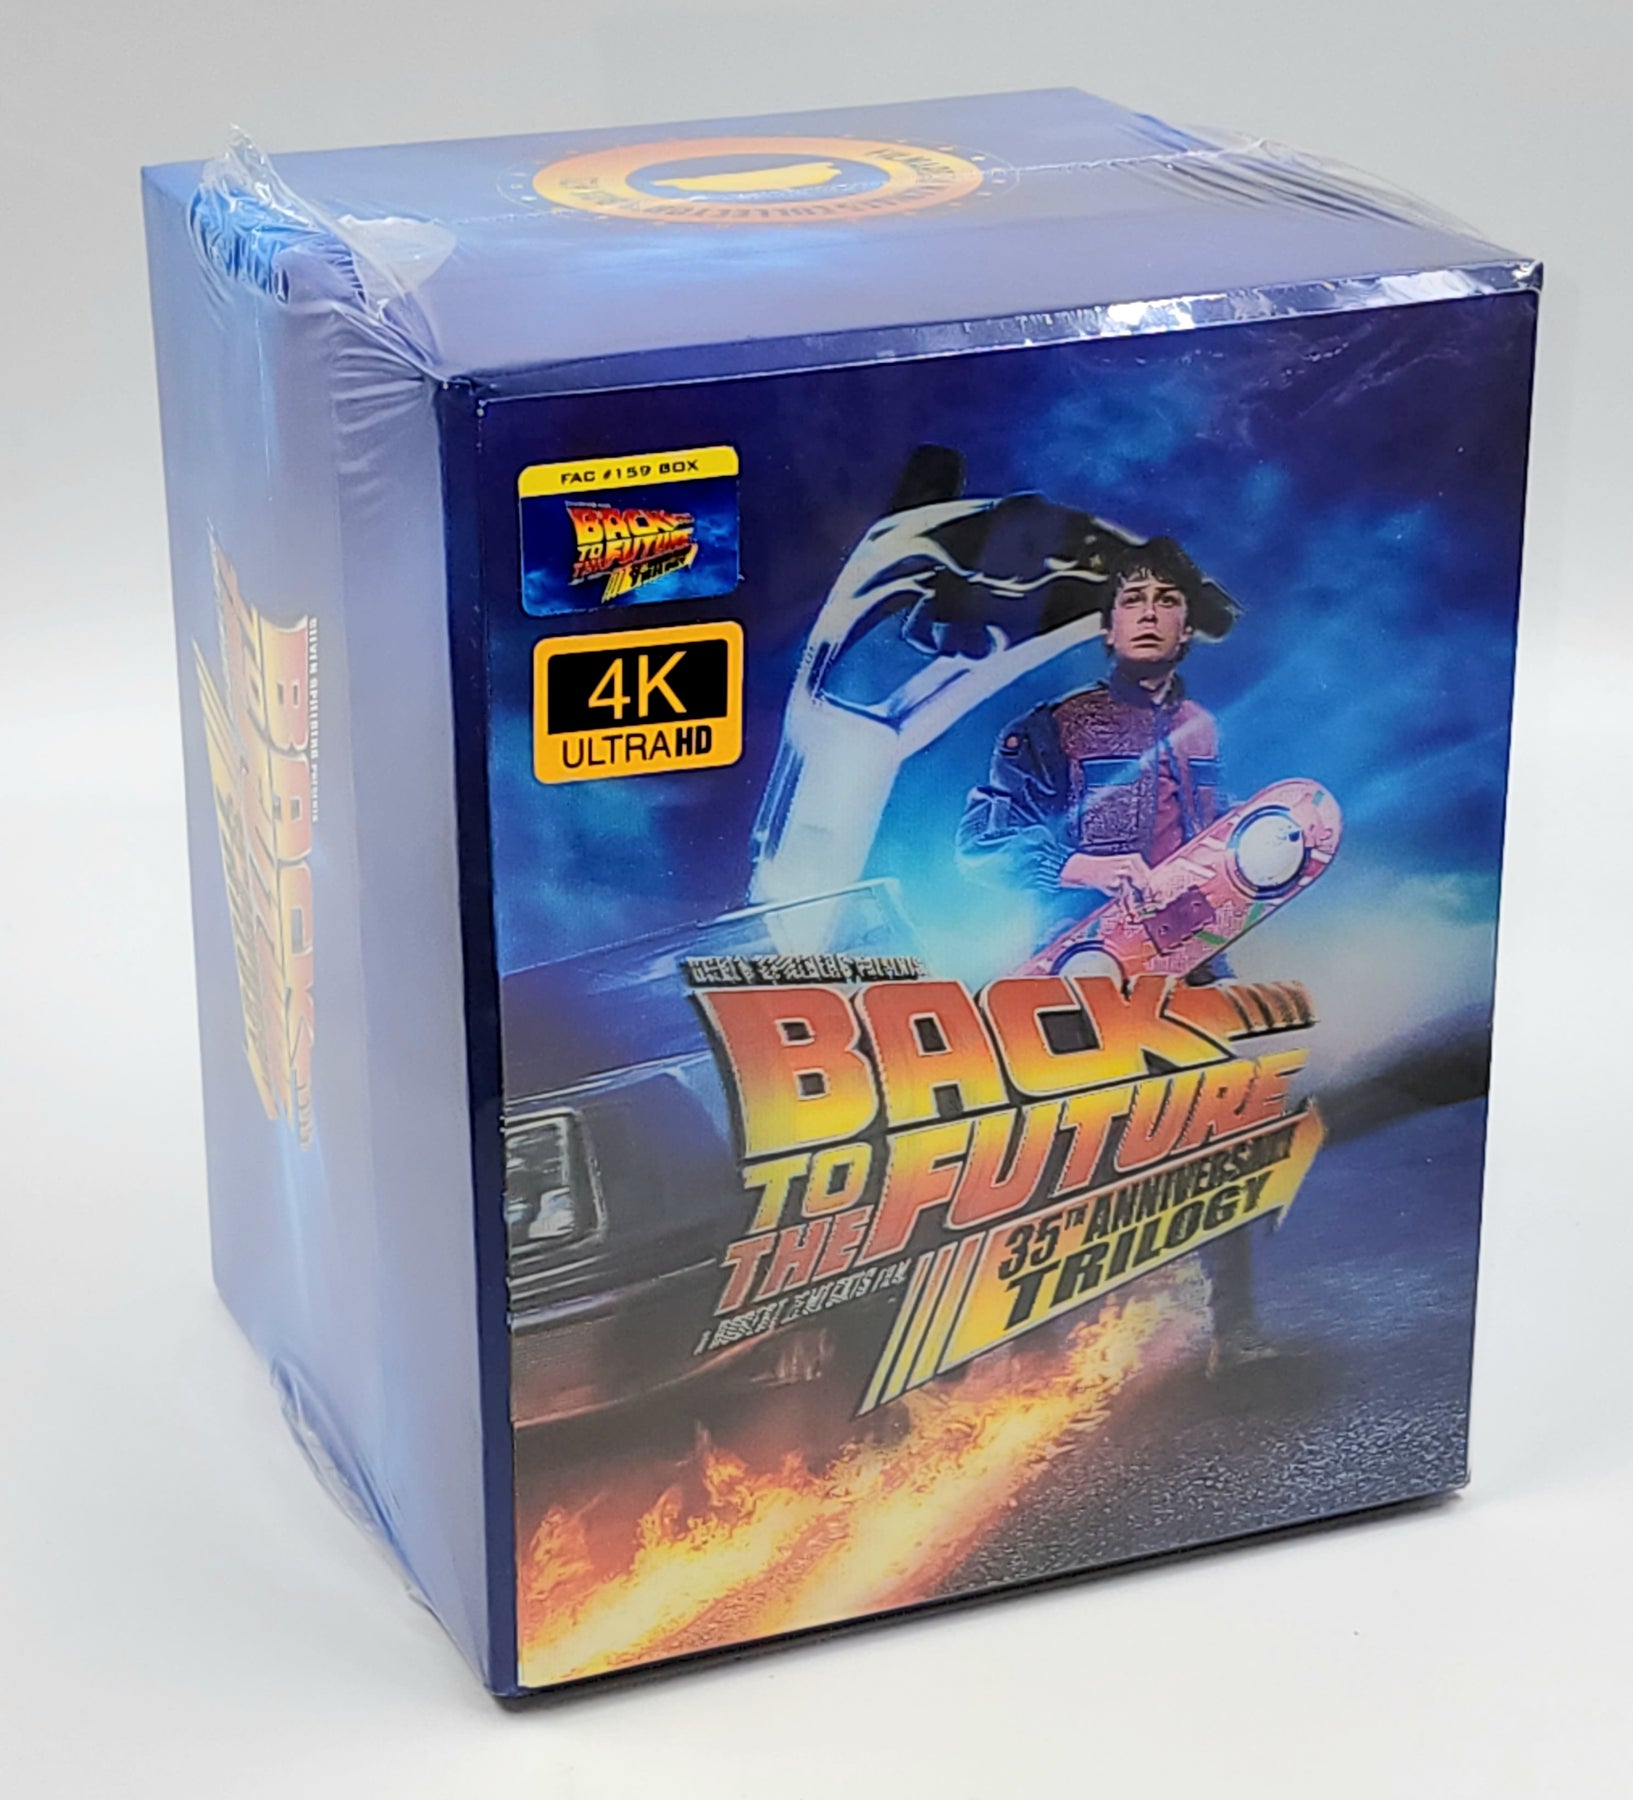 BACK TO THE FUTURE TRILOGY [4K UHD+2D] Blu-Ray STEELBOOK MANIACS BOX  [FILMARENA]